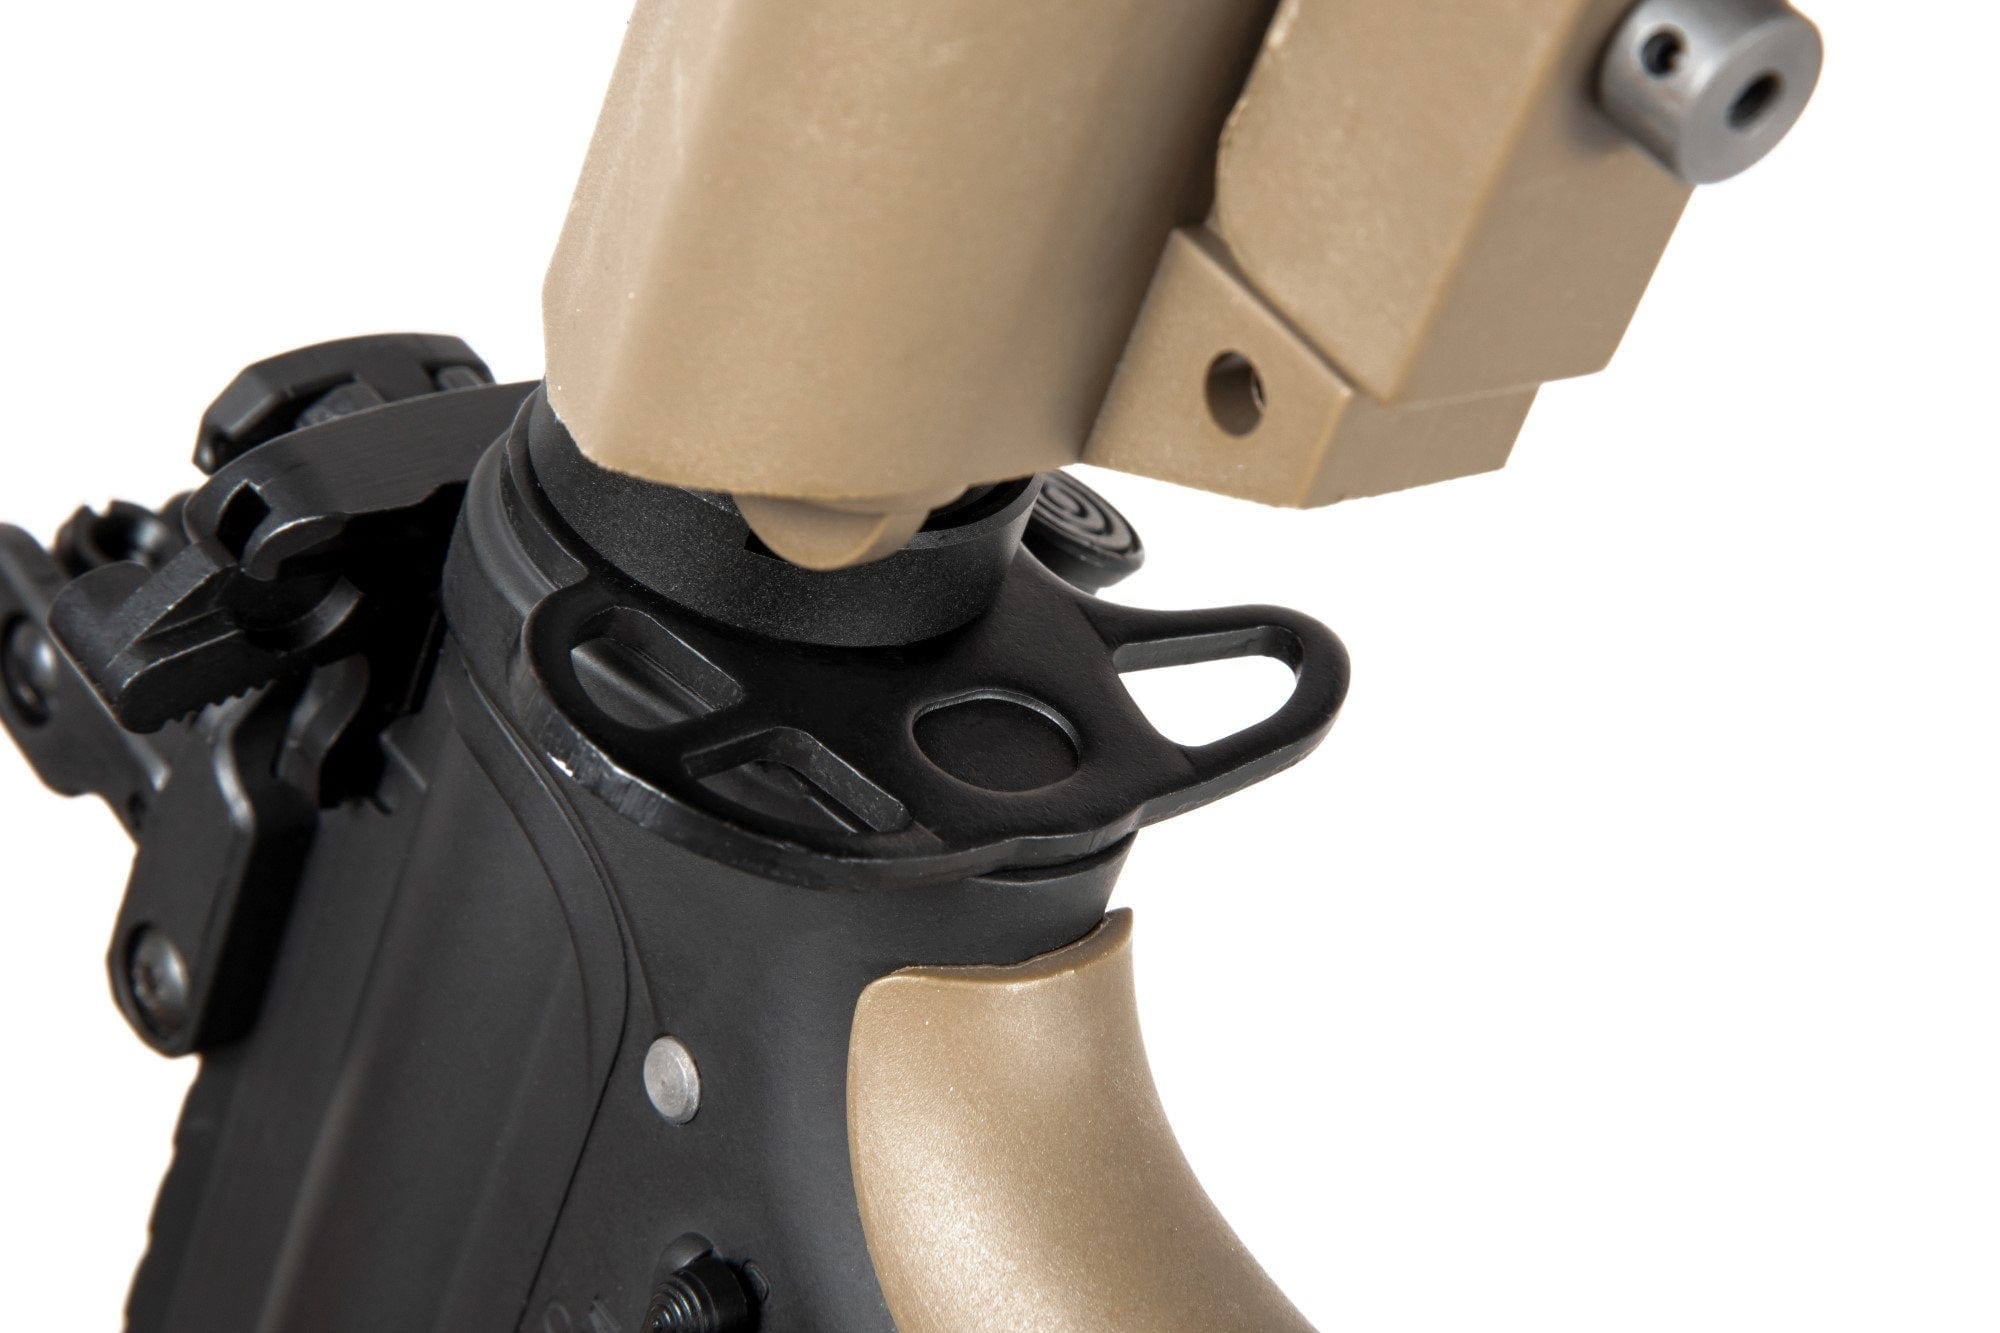 RRA SA-E11 EDGE™ carbine replica - Half-Tan by Specna Arms on Airsoft Mania Europe